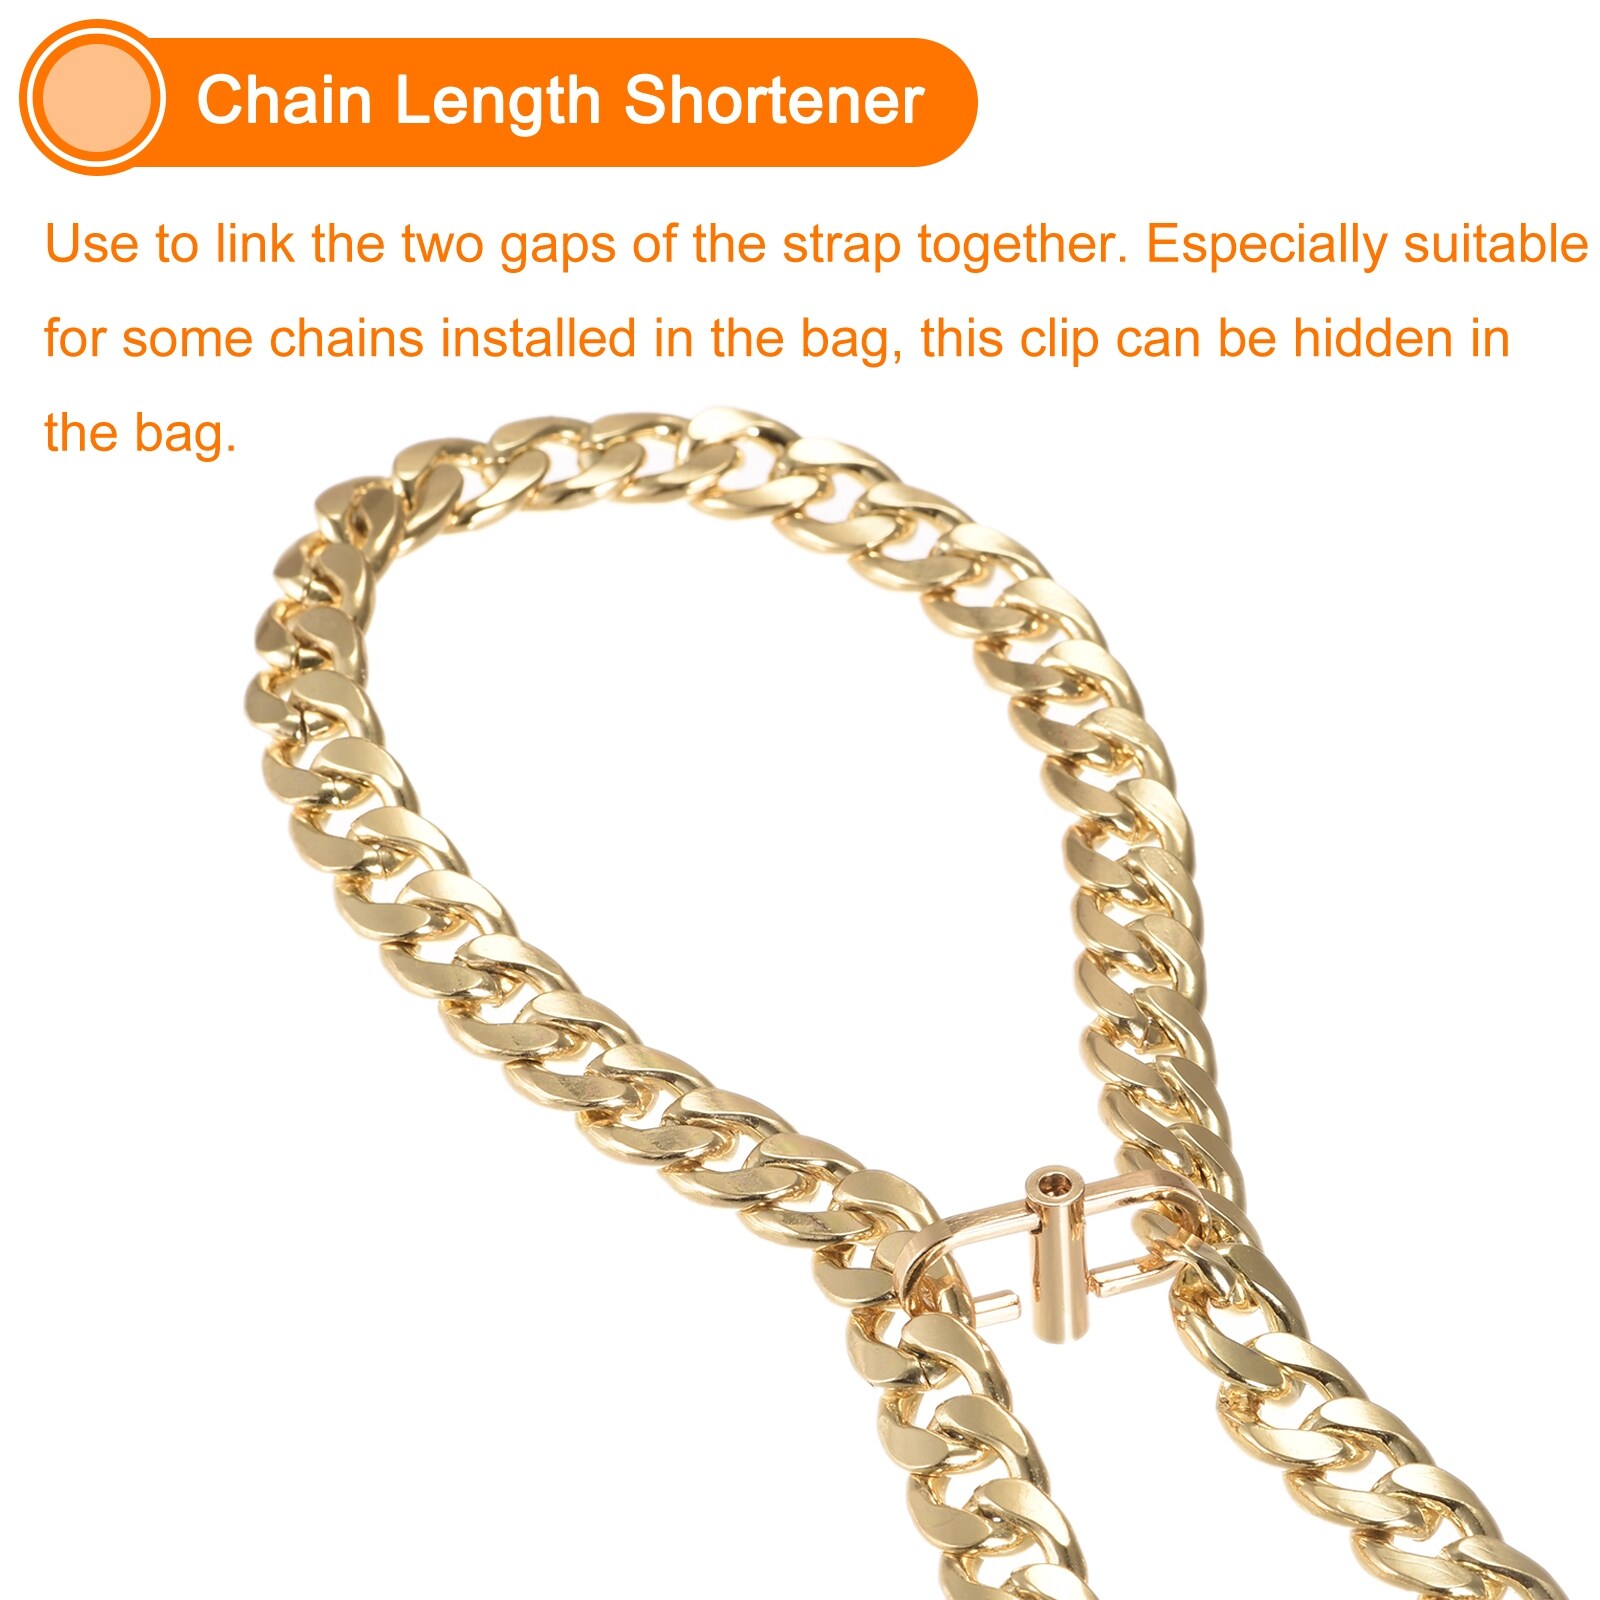 Adjustable Metal Buckles 2pcs 22x10mm Chain Shortener Bag Strap Clasps - Gold Tone